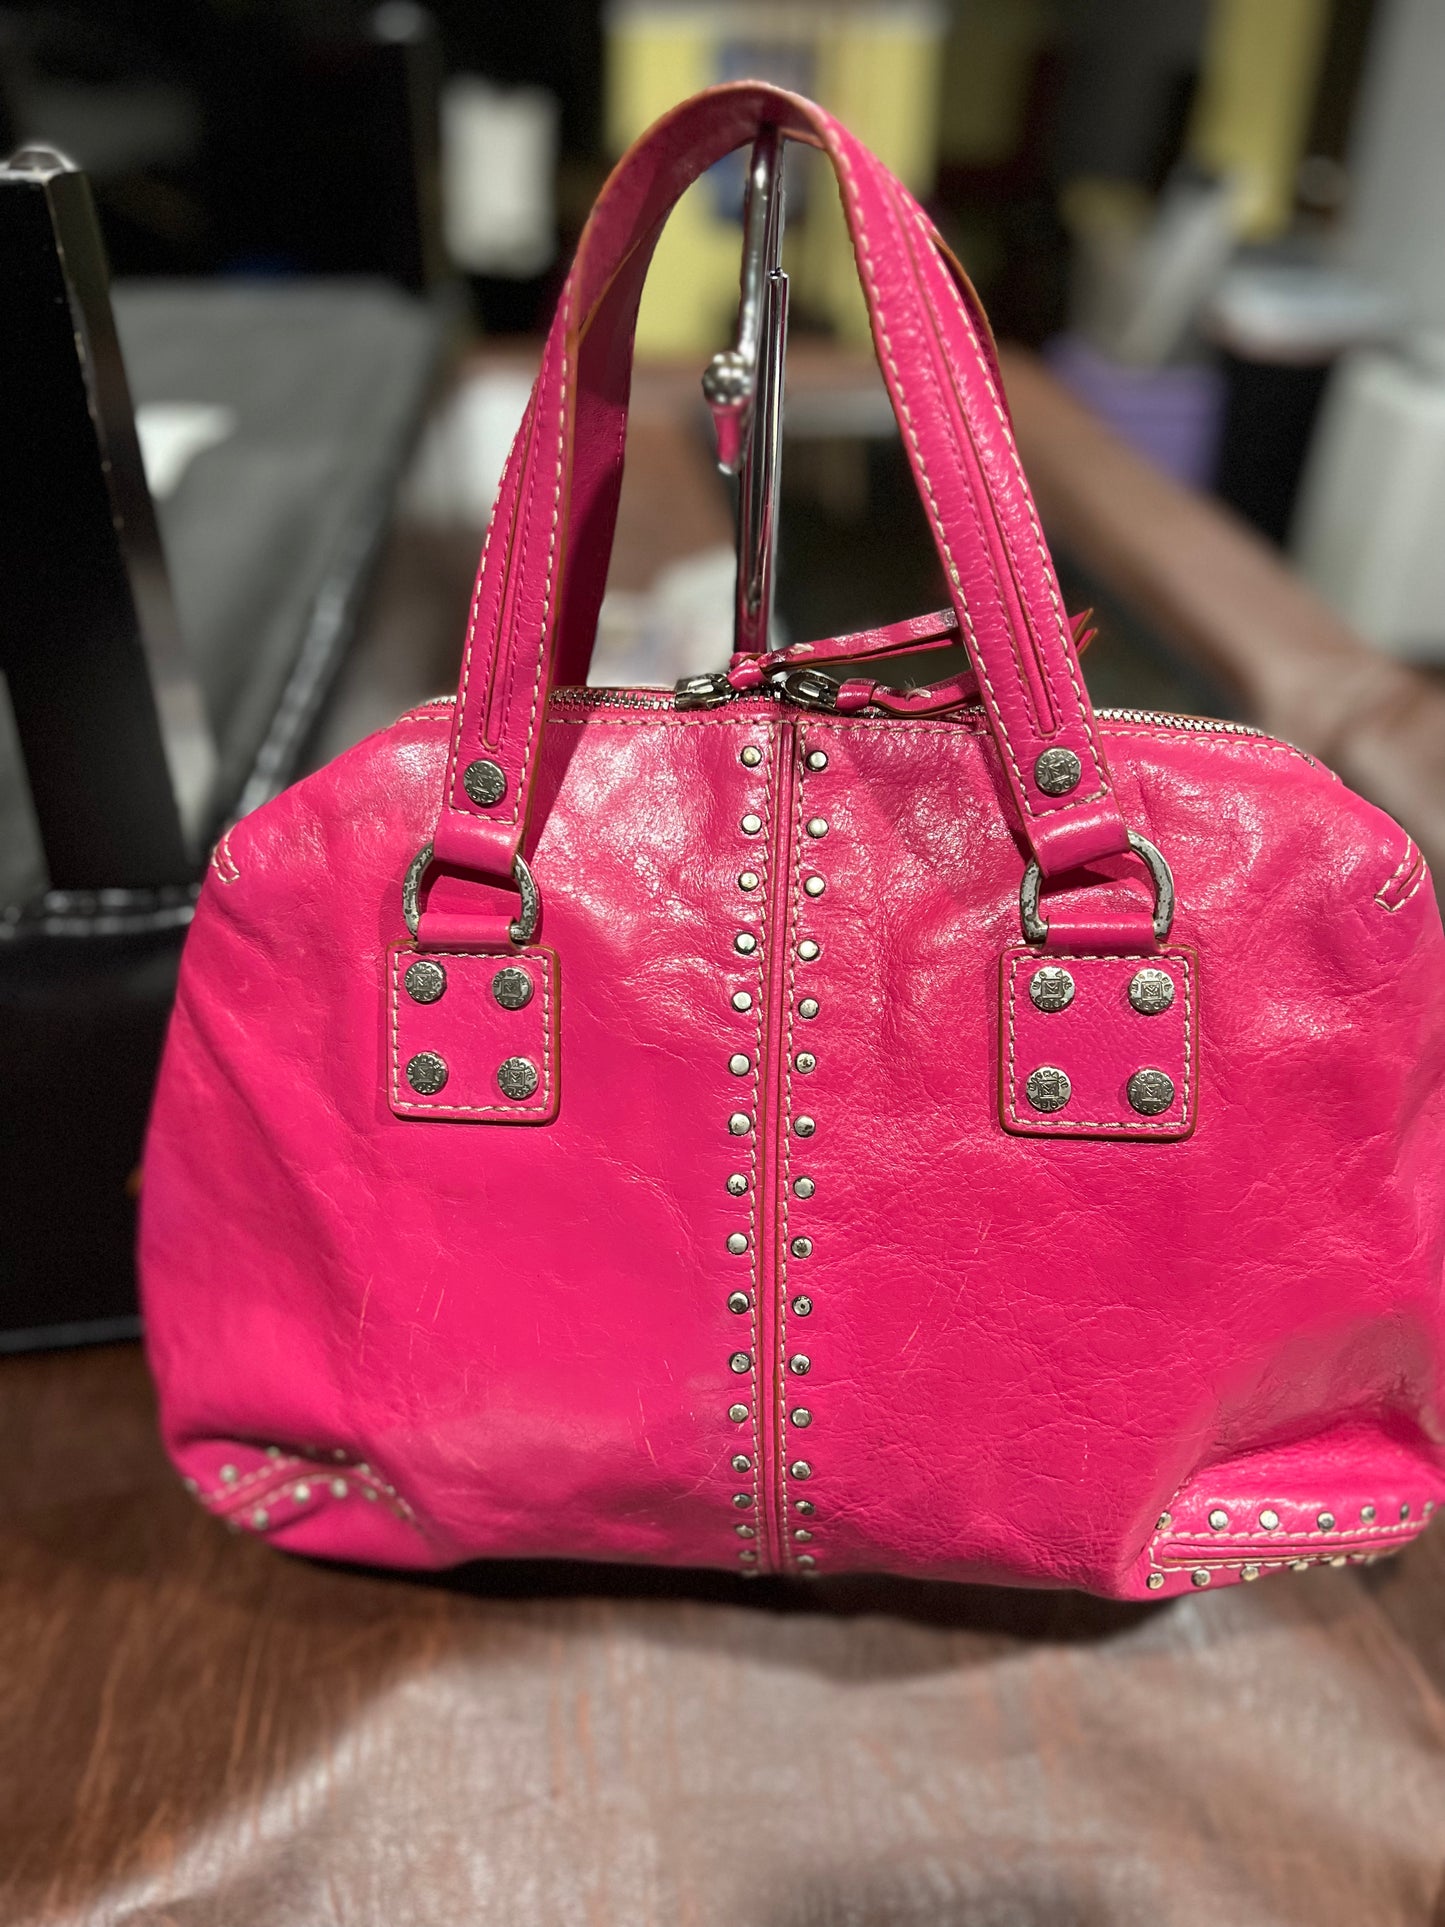 Hot Pink Michael Kors Handbag